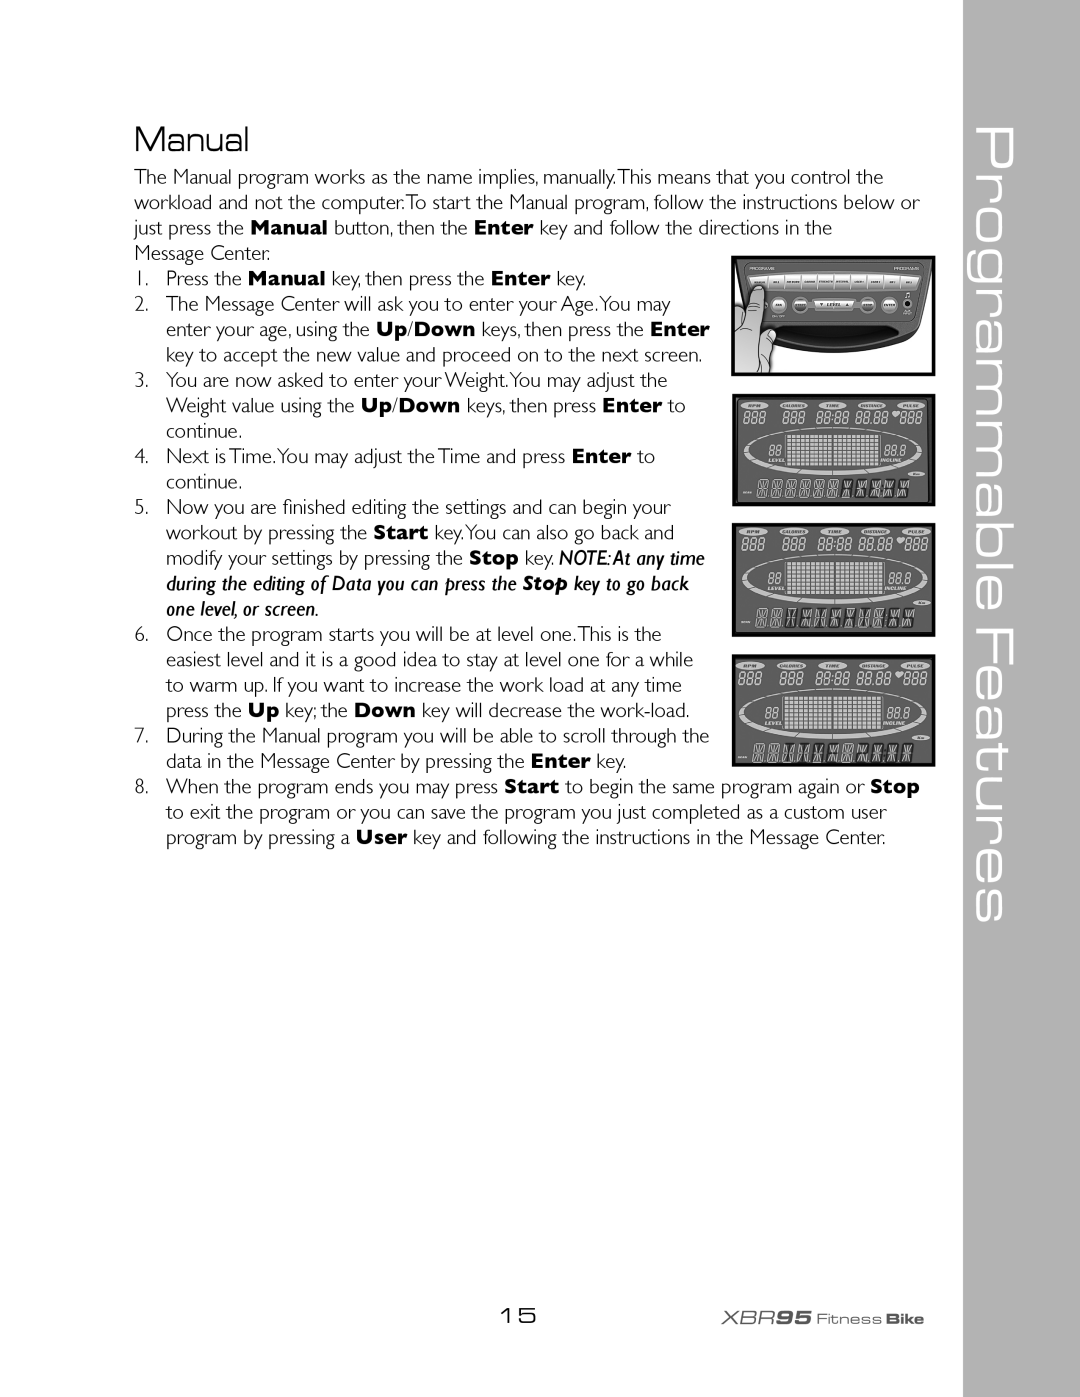 Spirit XBR95 owner manual Manual 